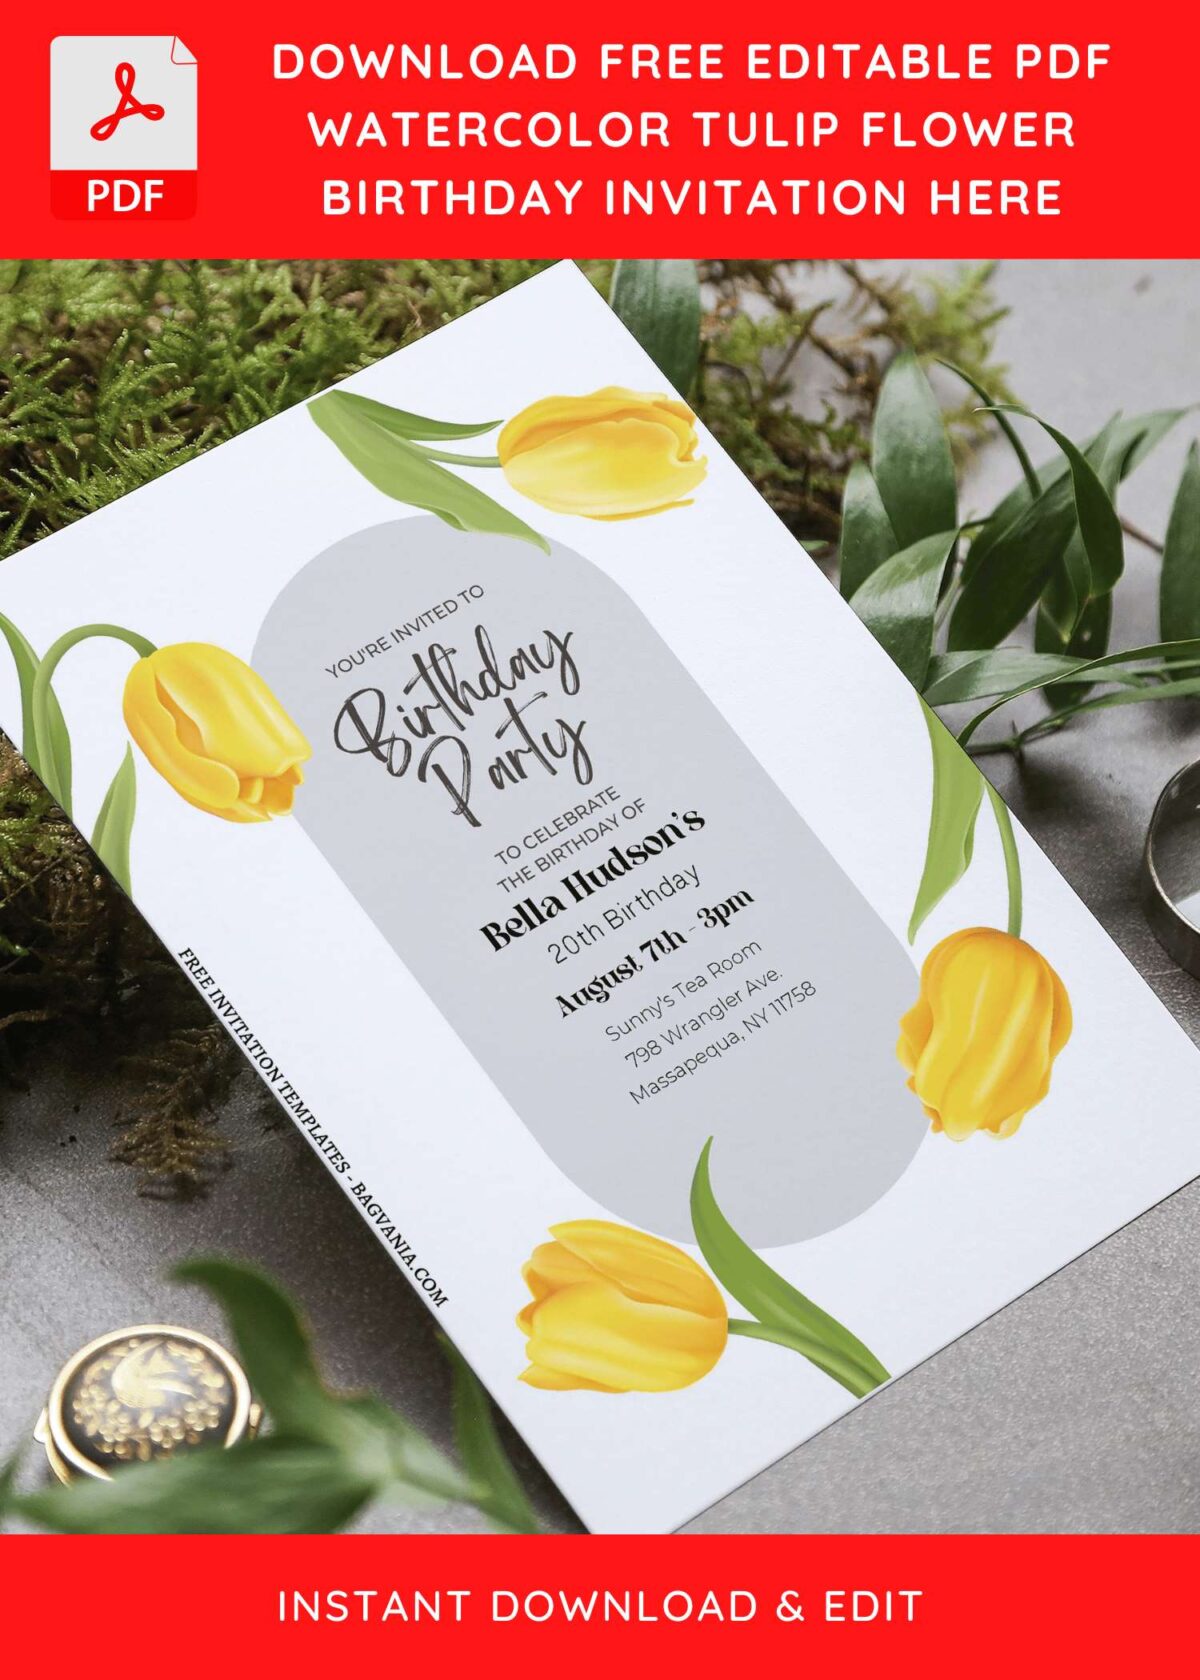 (Free Editable PDF) Garden Tulip Birthday Invitation Templates F